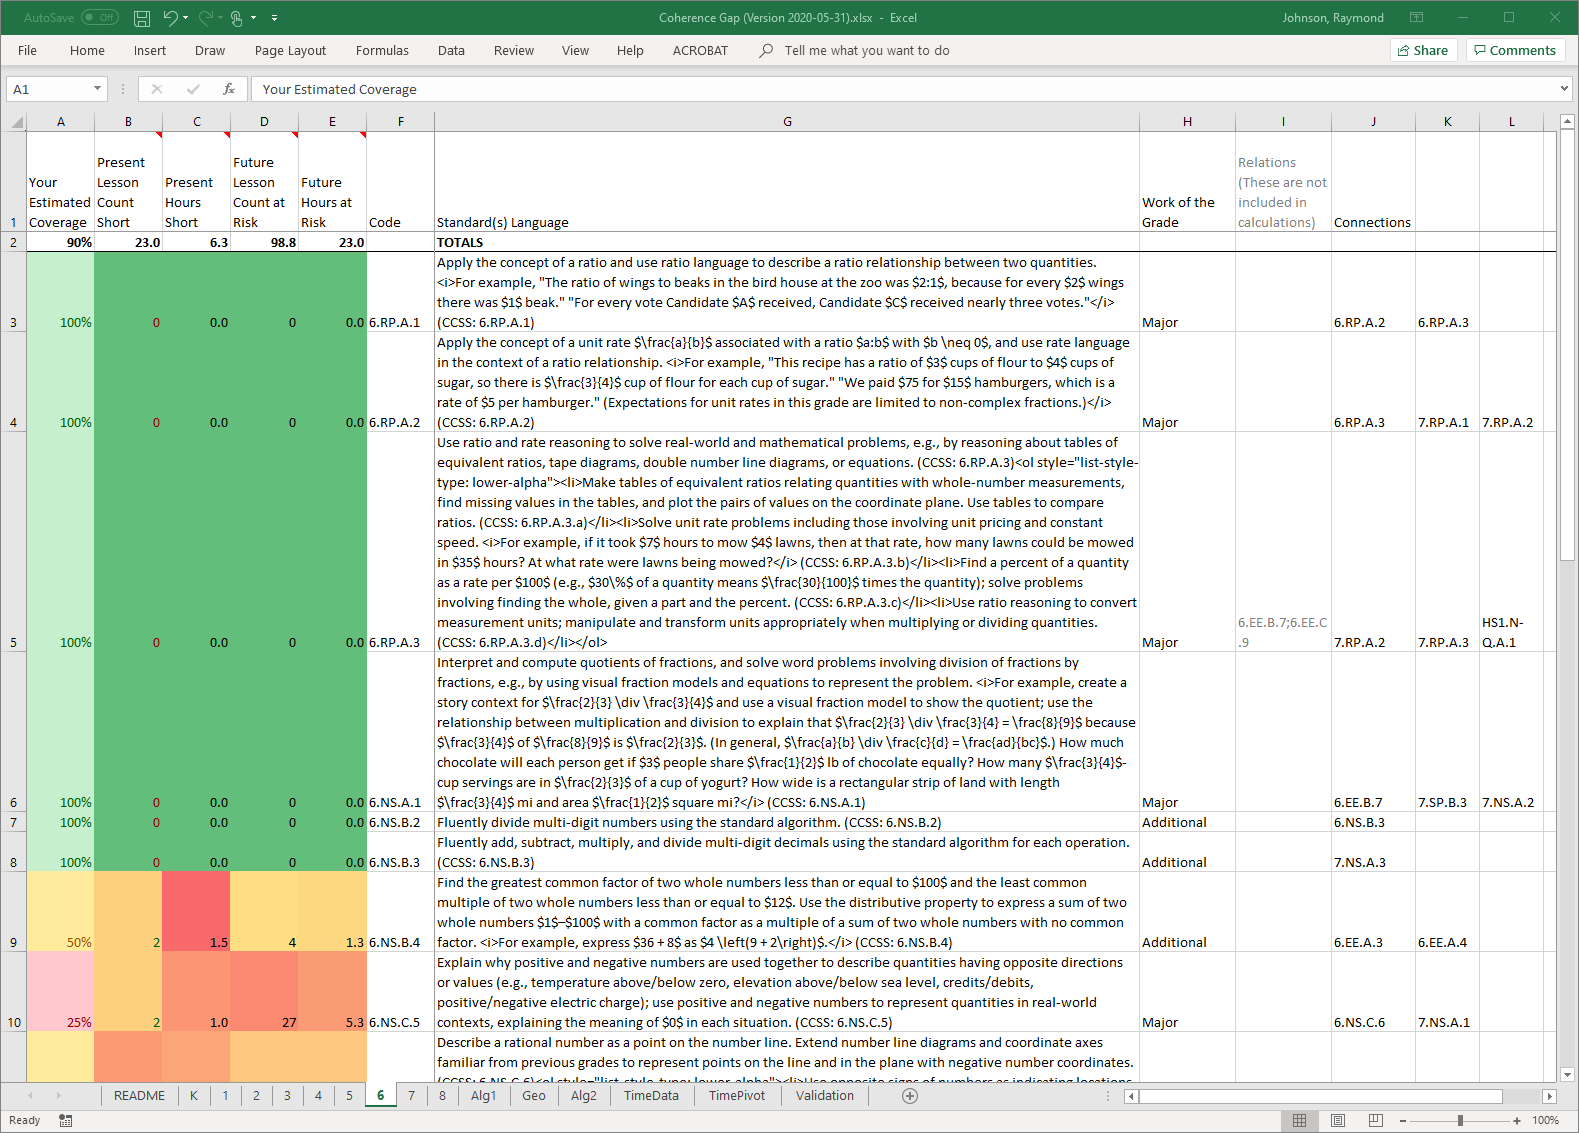 screenshot of the Coherence Gap spreadsheet